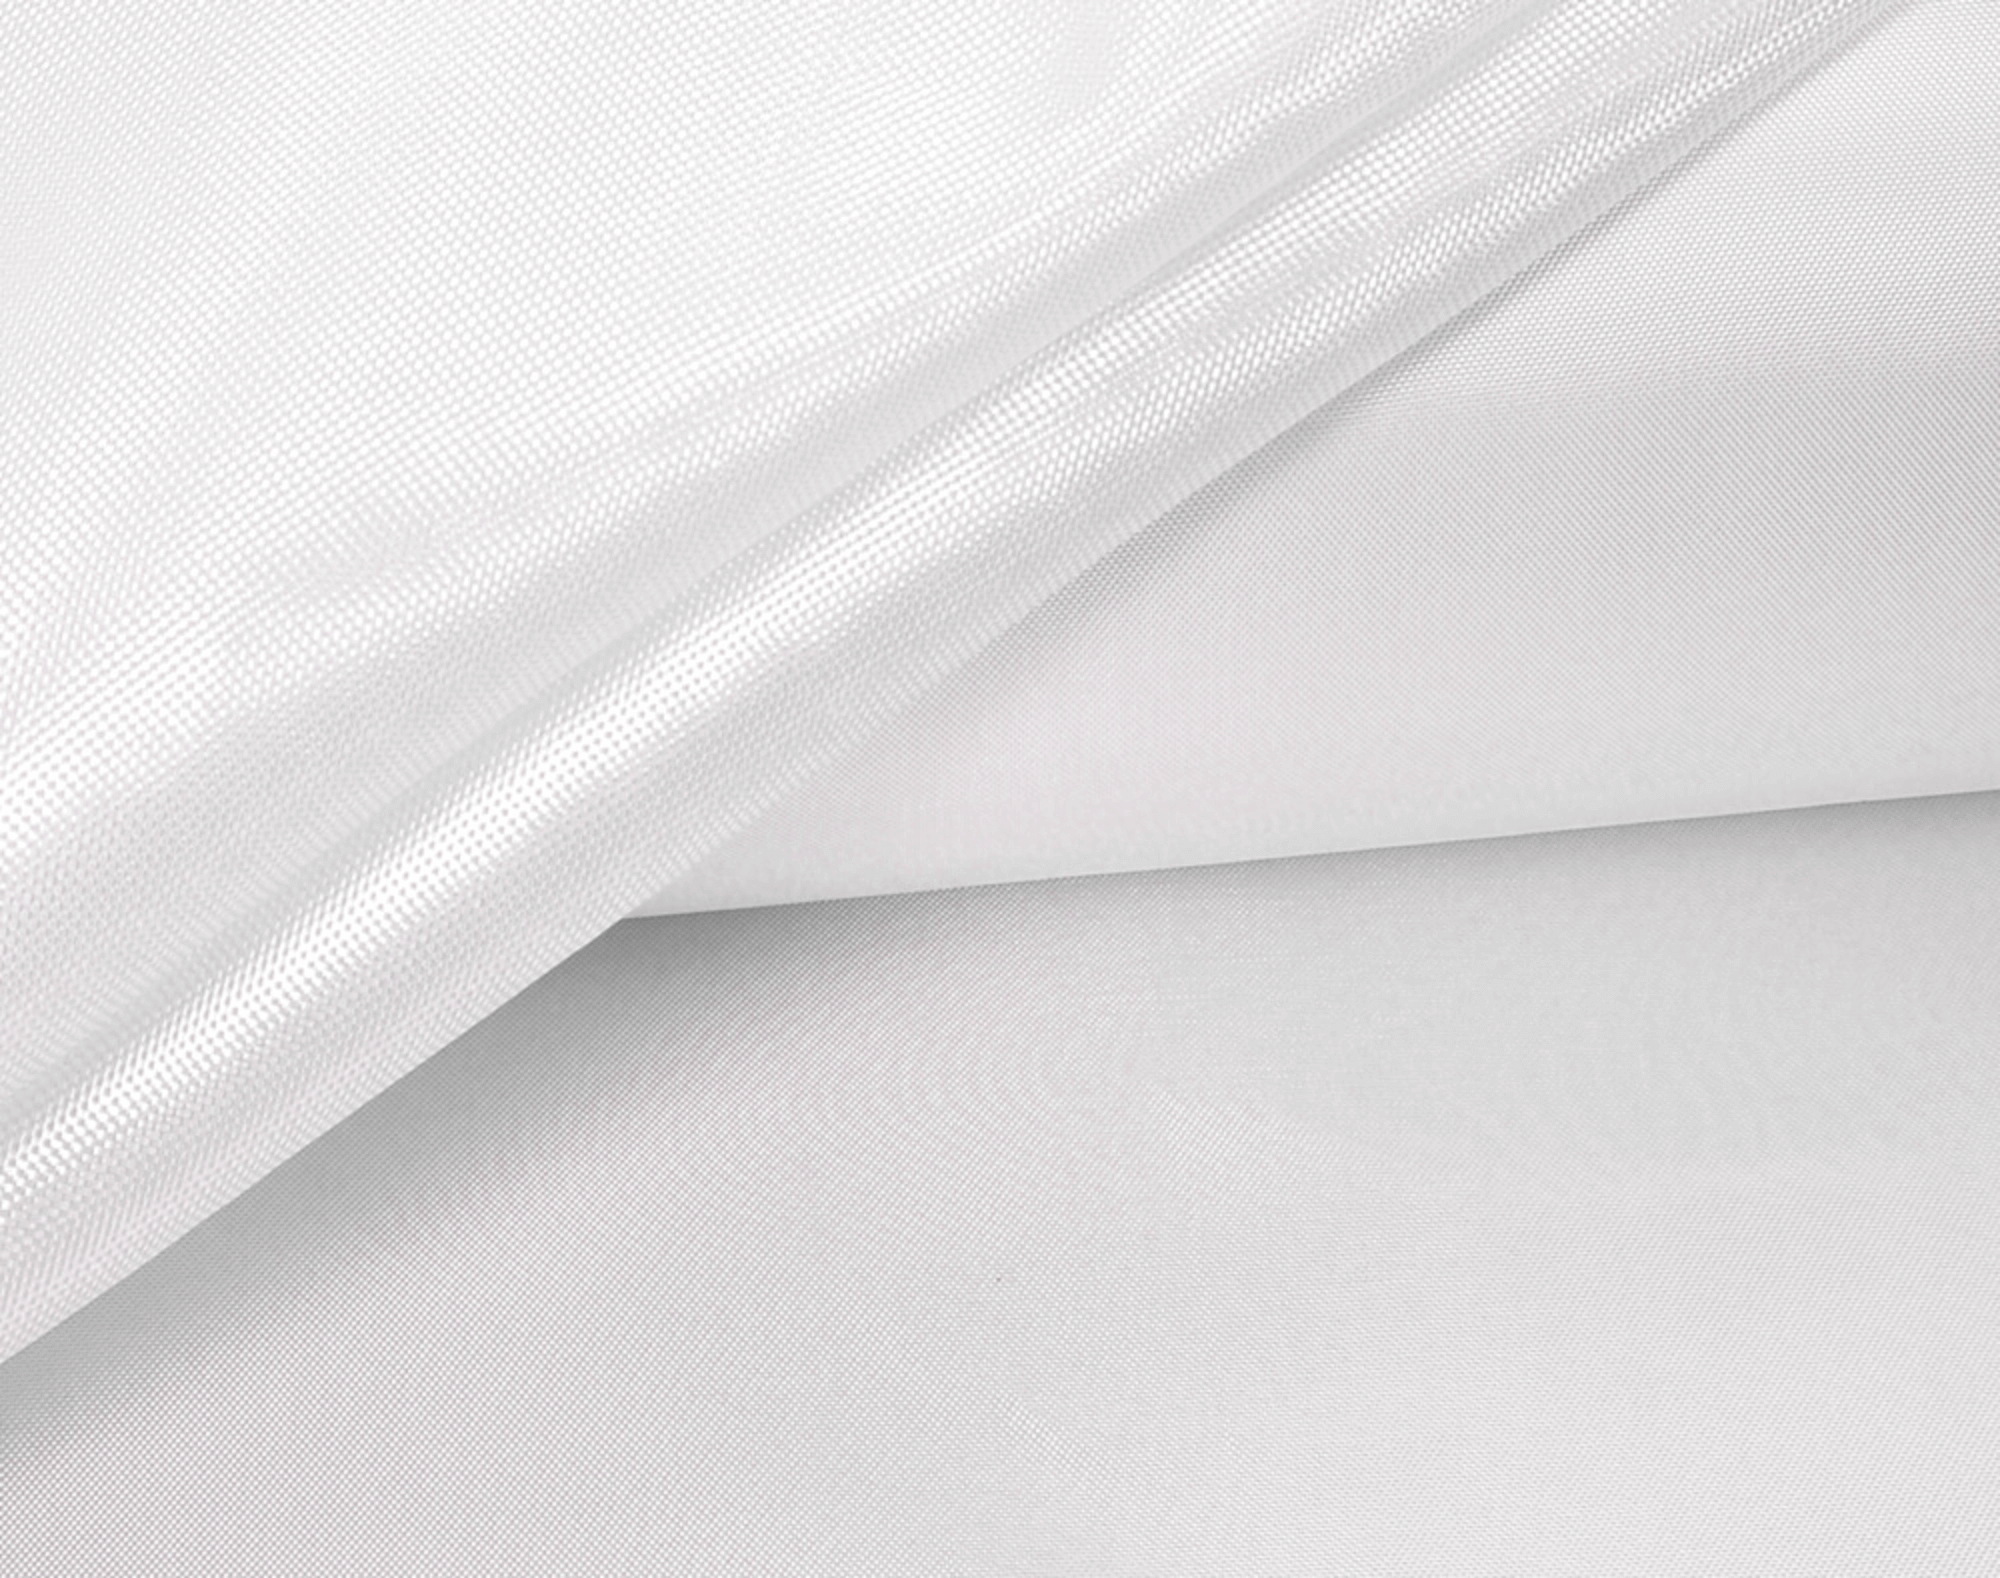 A close up image of a white sheet made of paslanmaz çelik.